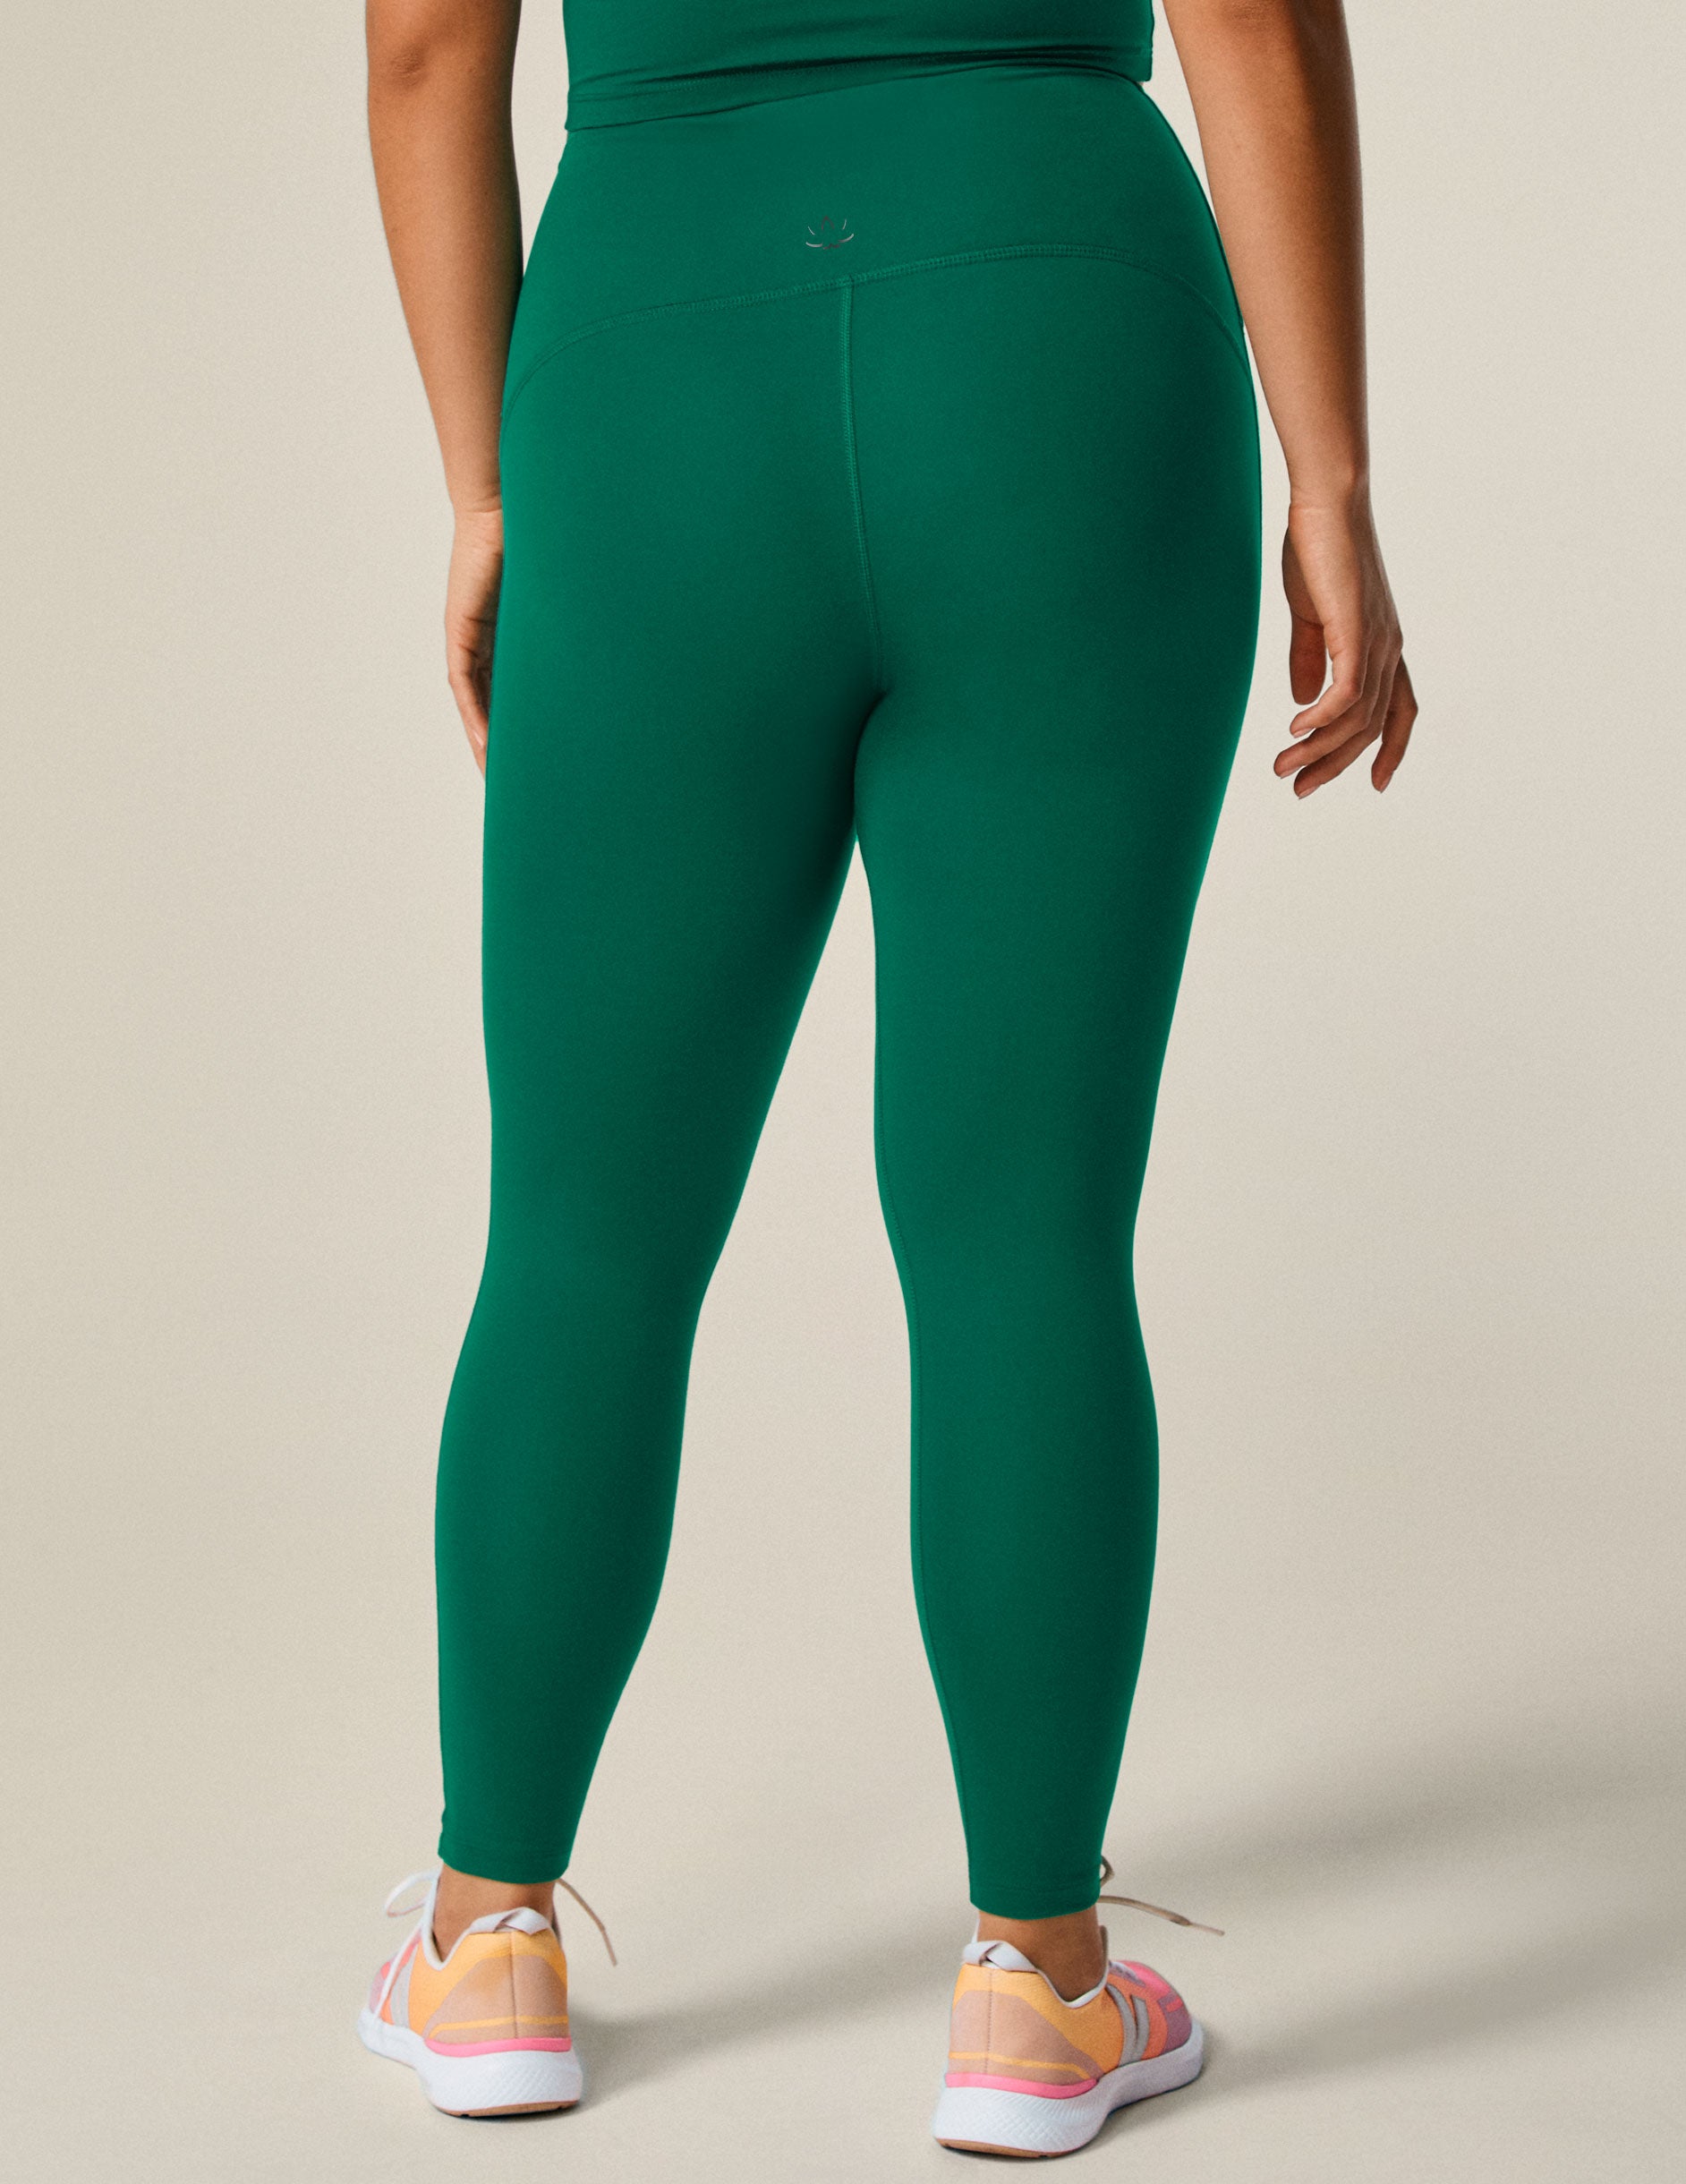 green 4" waistband midi leggings. 